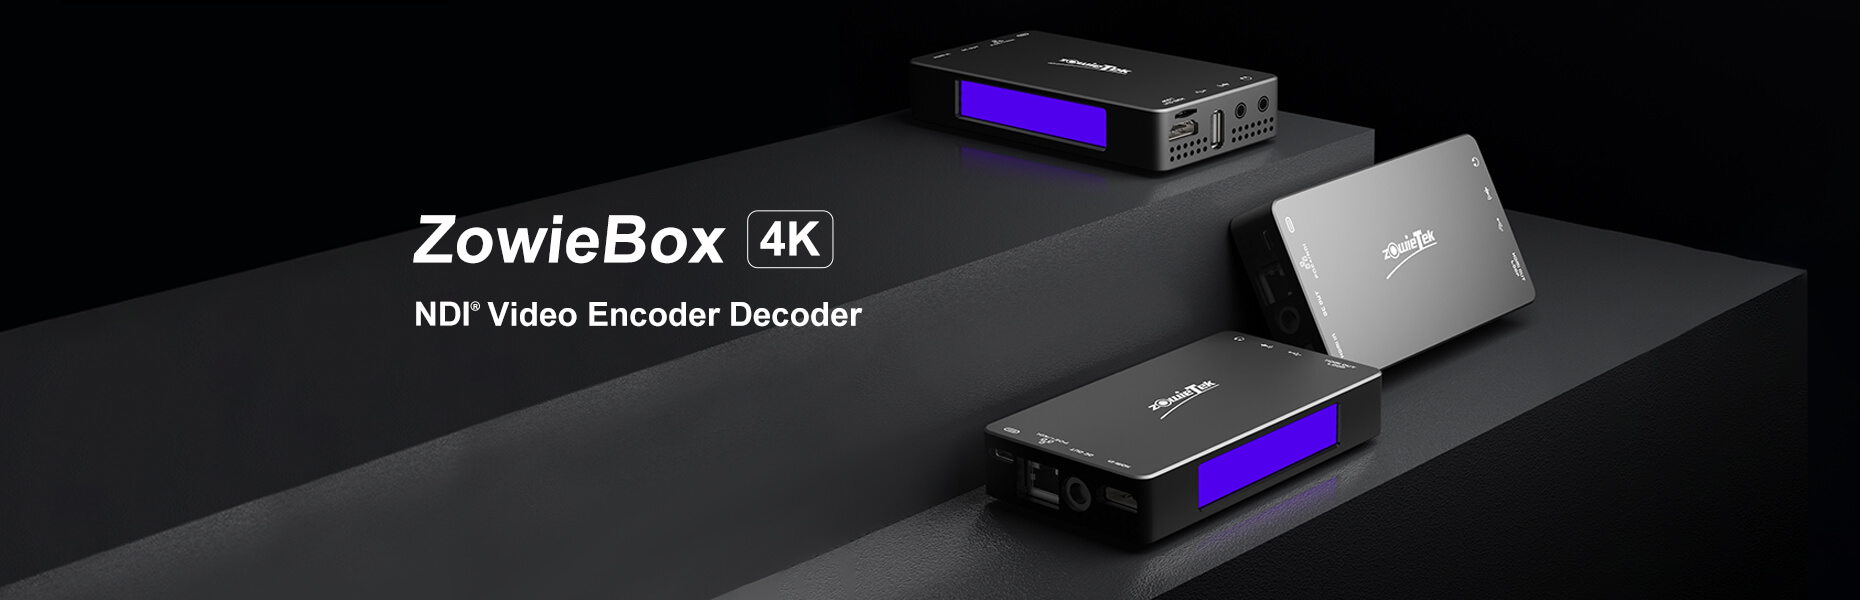 zowietek 4K NDI video encoder decoder features